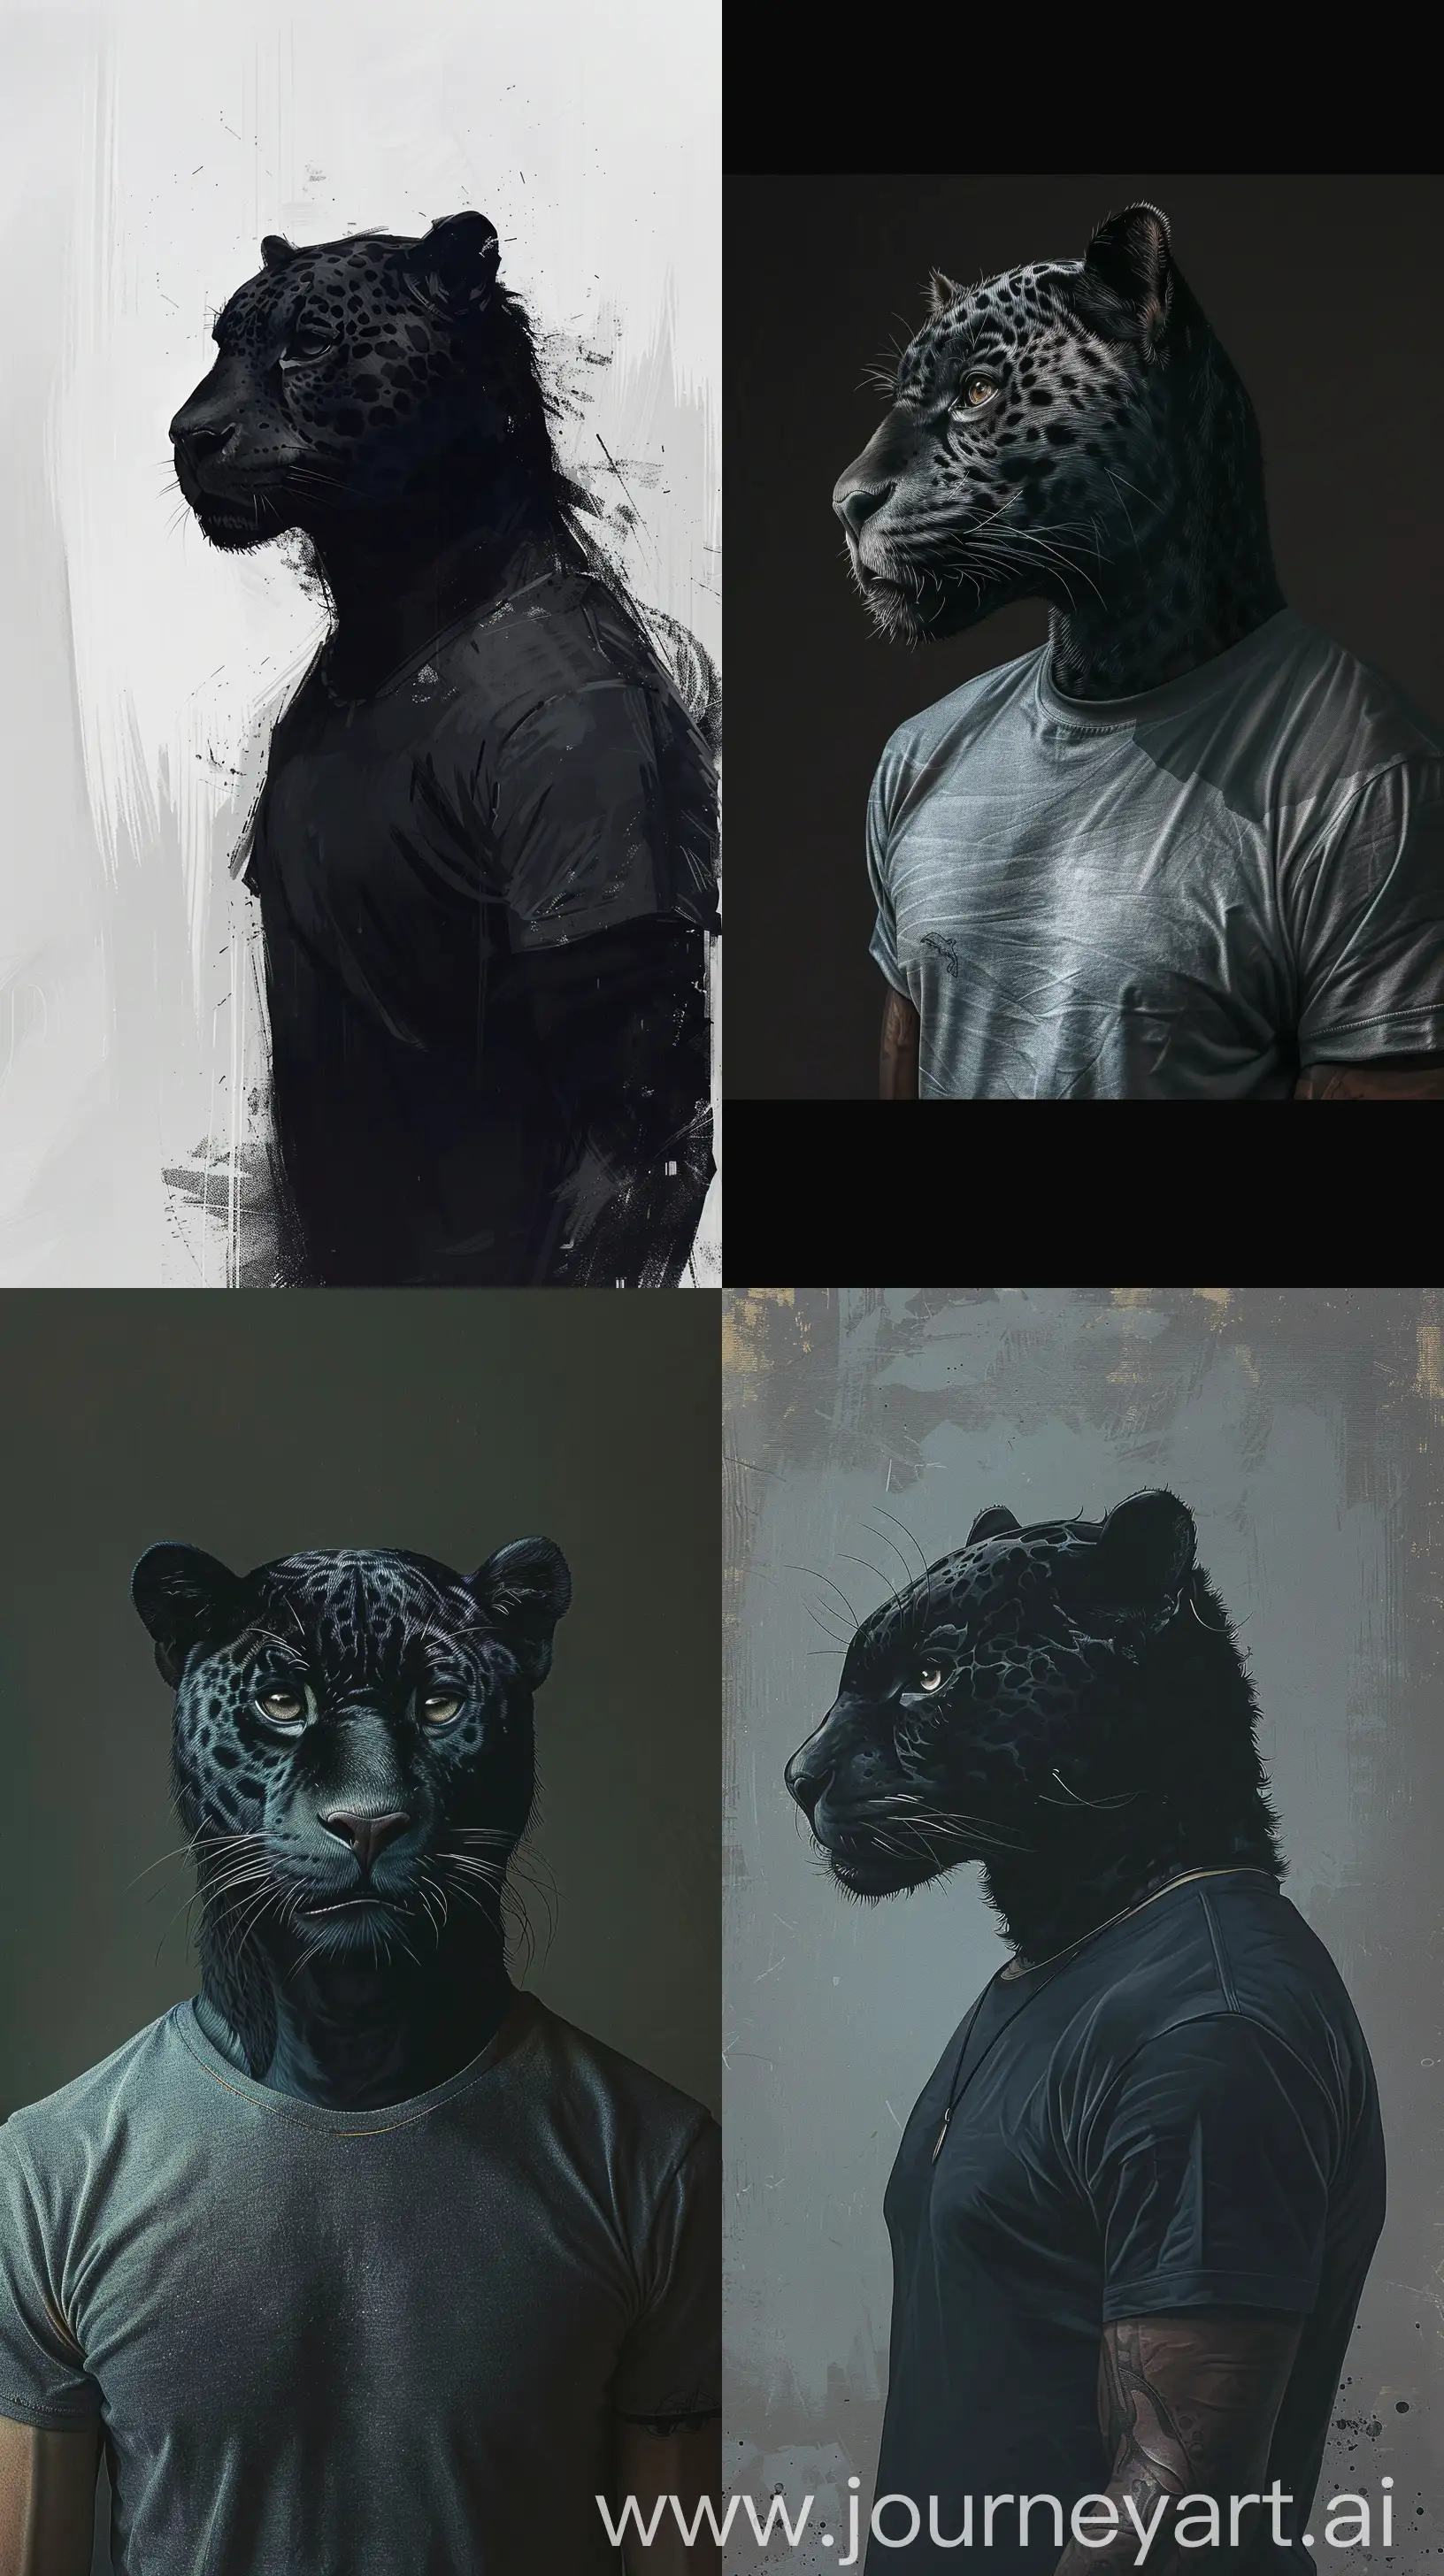 Tom gauld art style of a black jaguar as a man in a t shirt as phone wallpaper ,calm, 8k uhd maximalist details. --ar 9:16